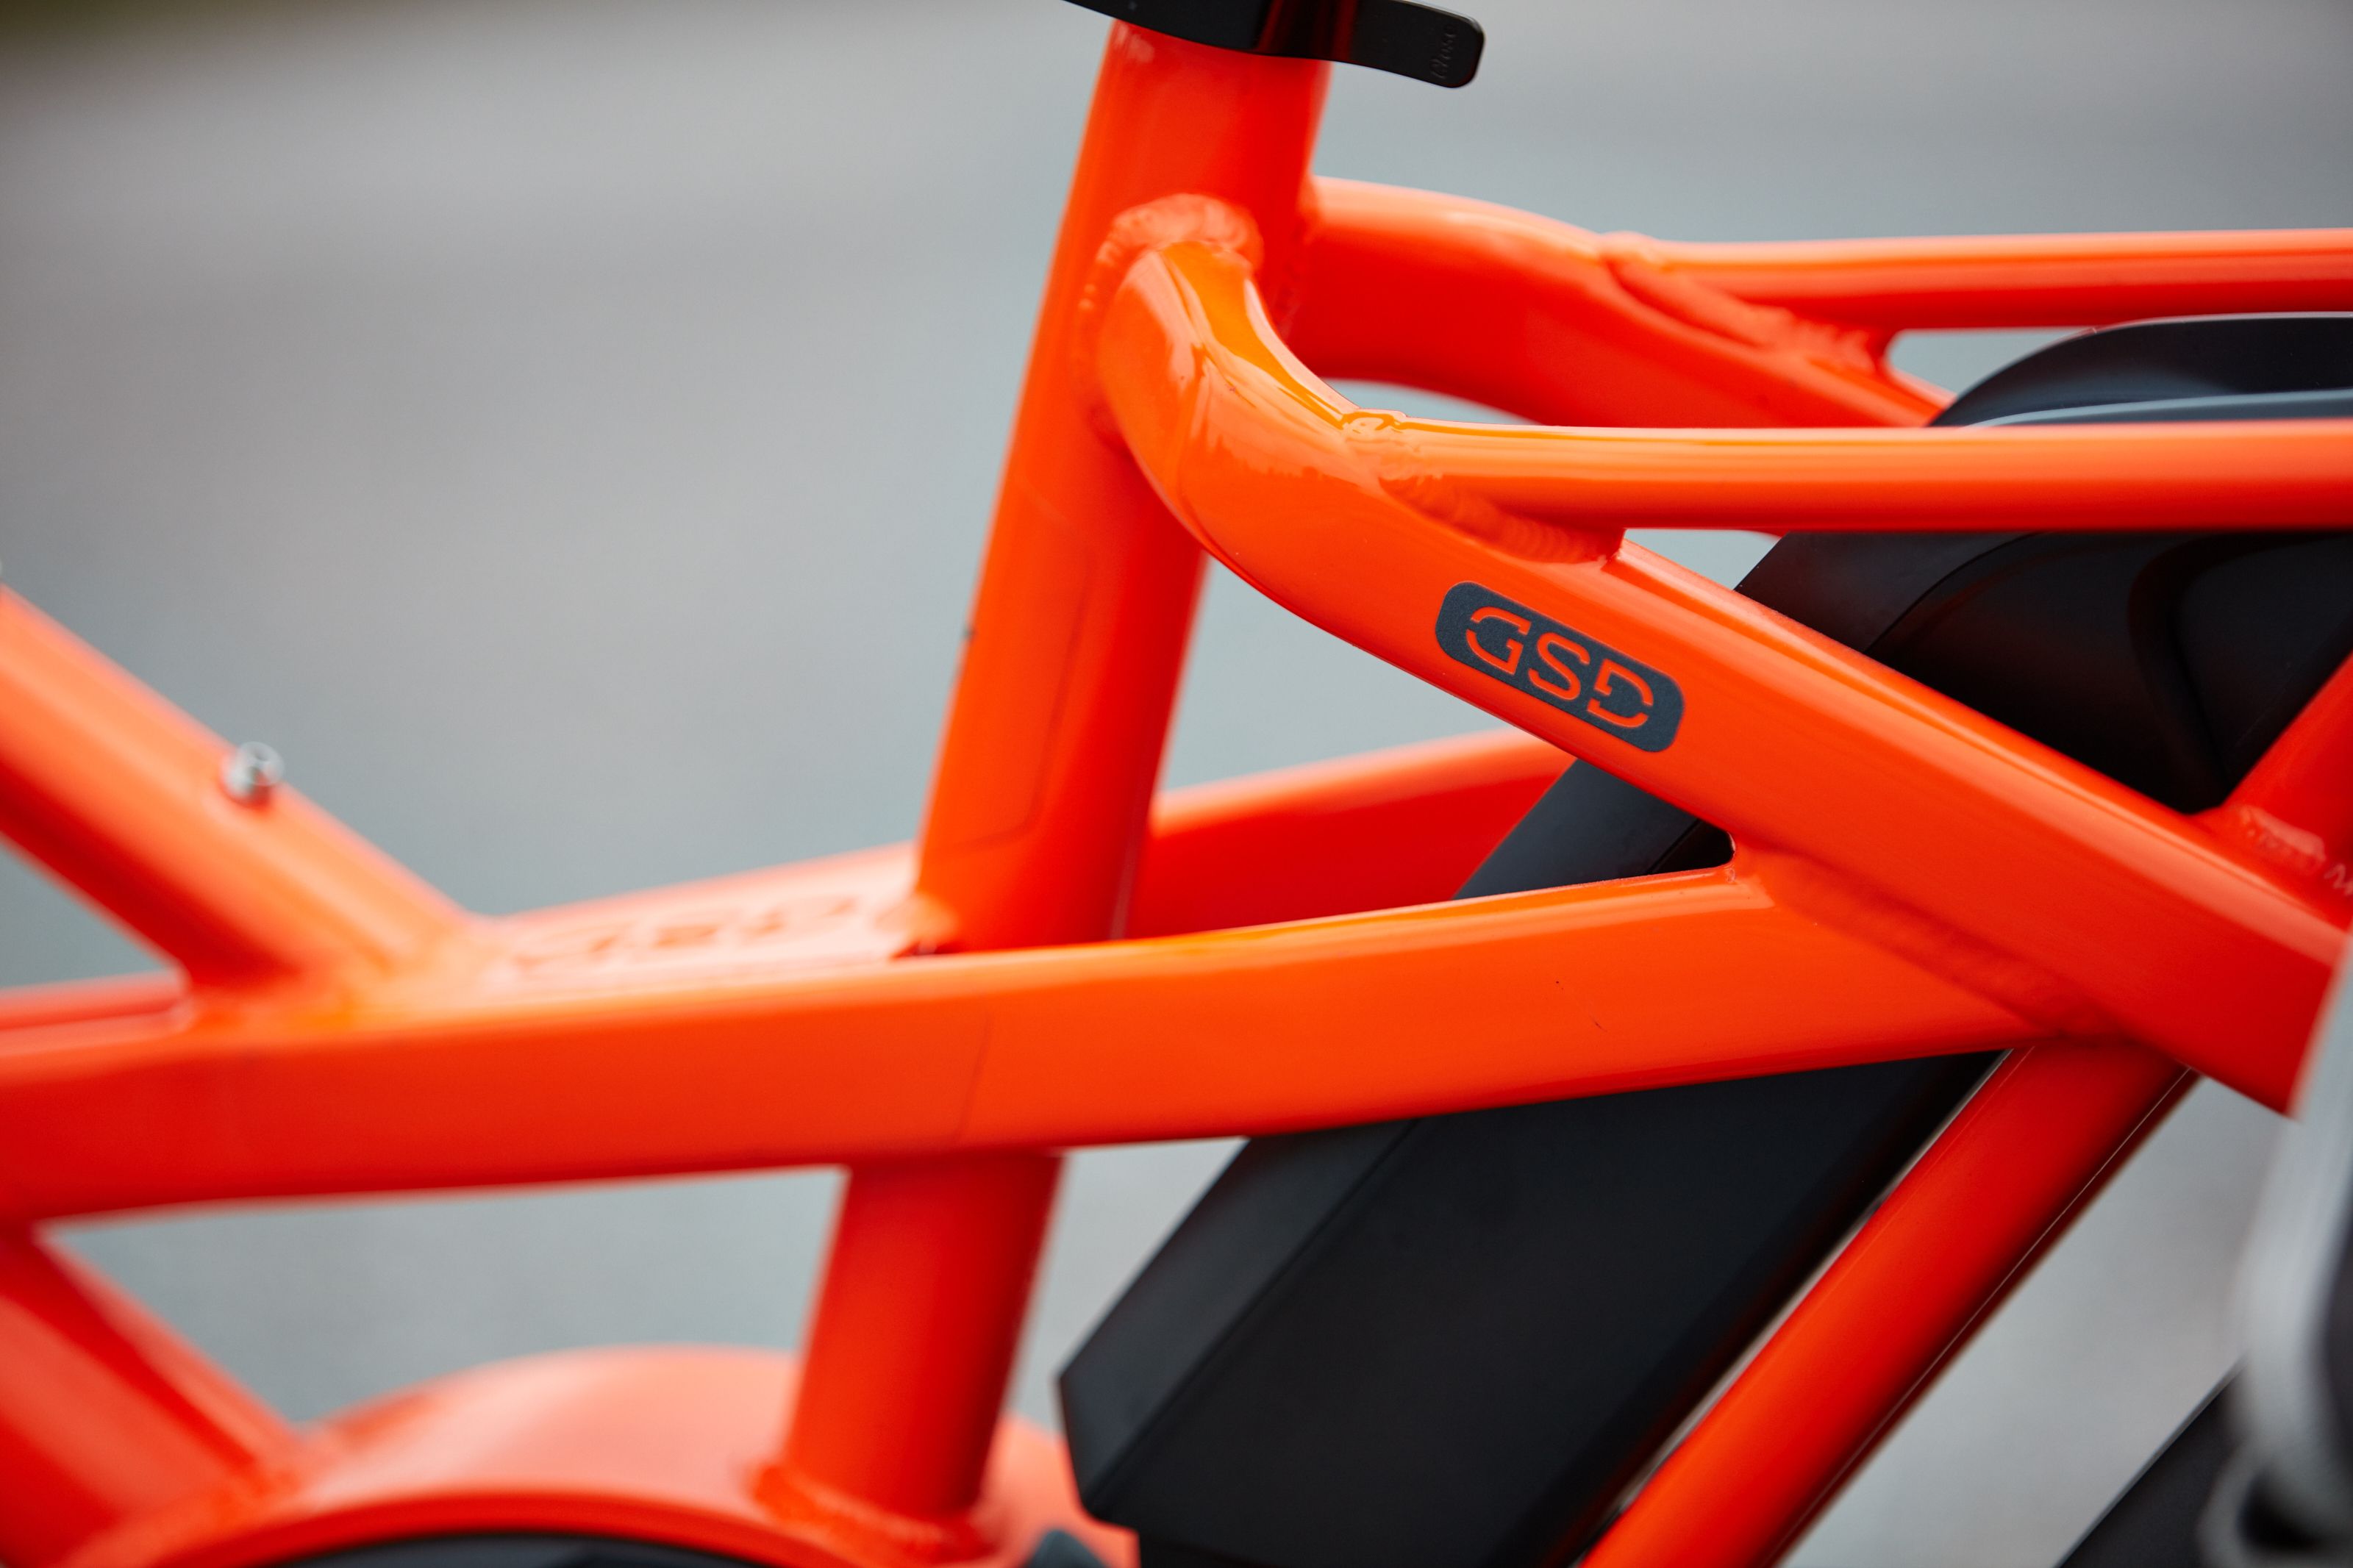 Bicycle part, Orange, Red, Bicycle frame, Vehicle, Bicycle, Bicycle wheel, Bicycle handlebar, 